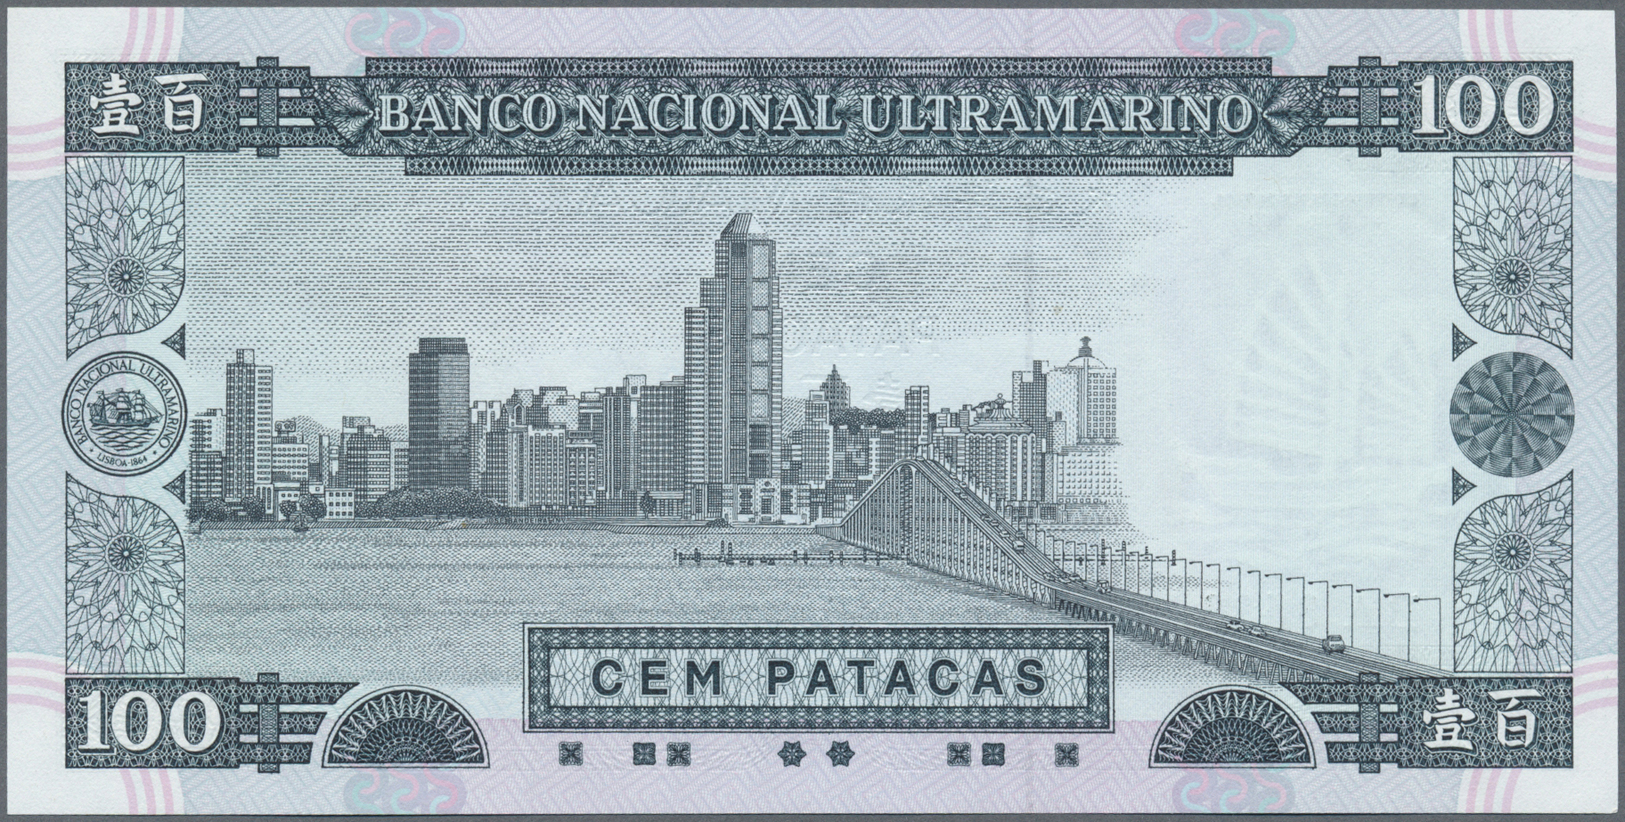 01616 Macau / Macao: 100 Patacas 1995 P. 68 In Condition: UNC. - Macau